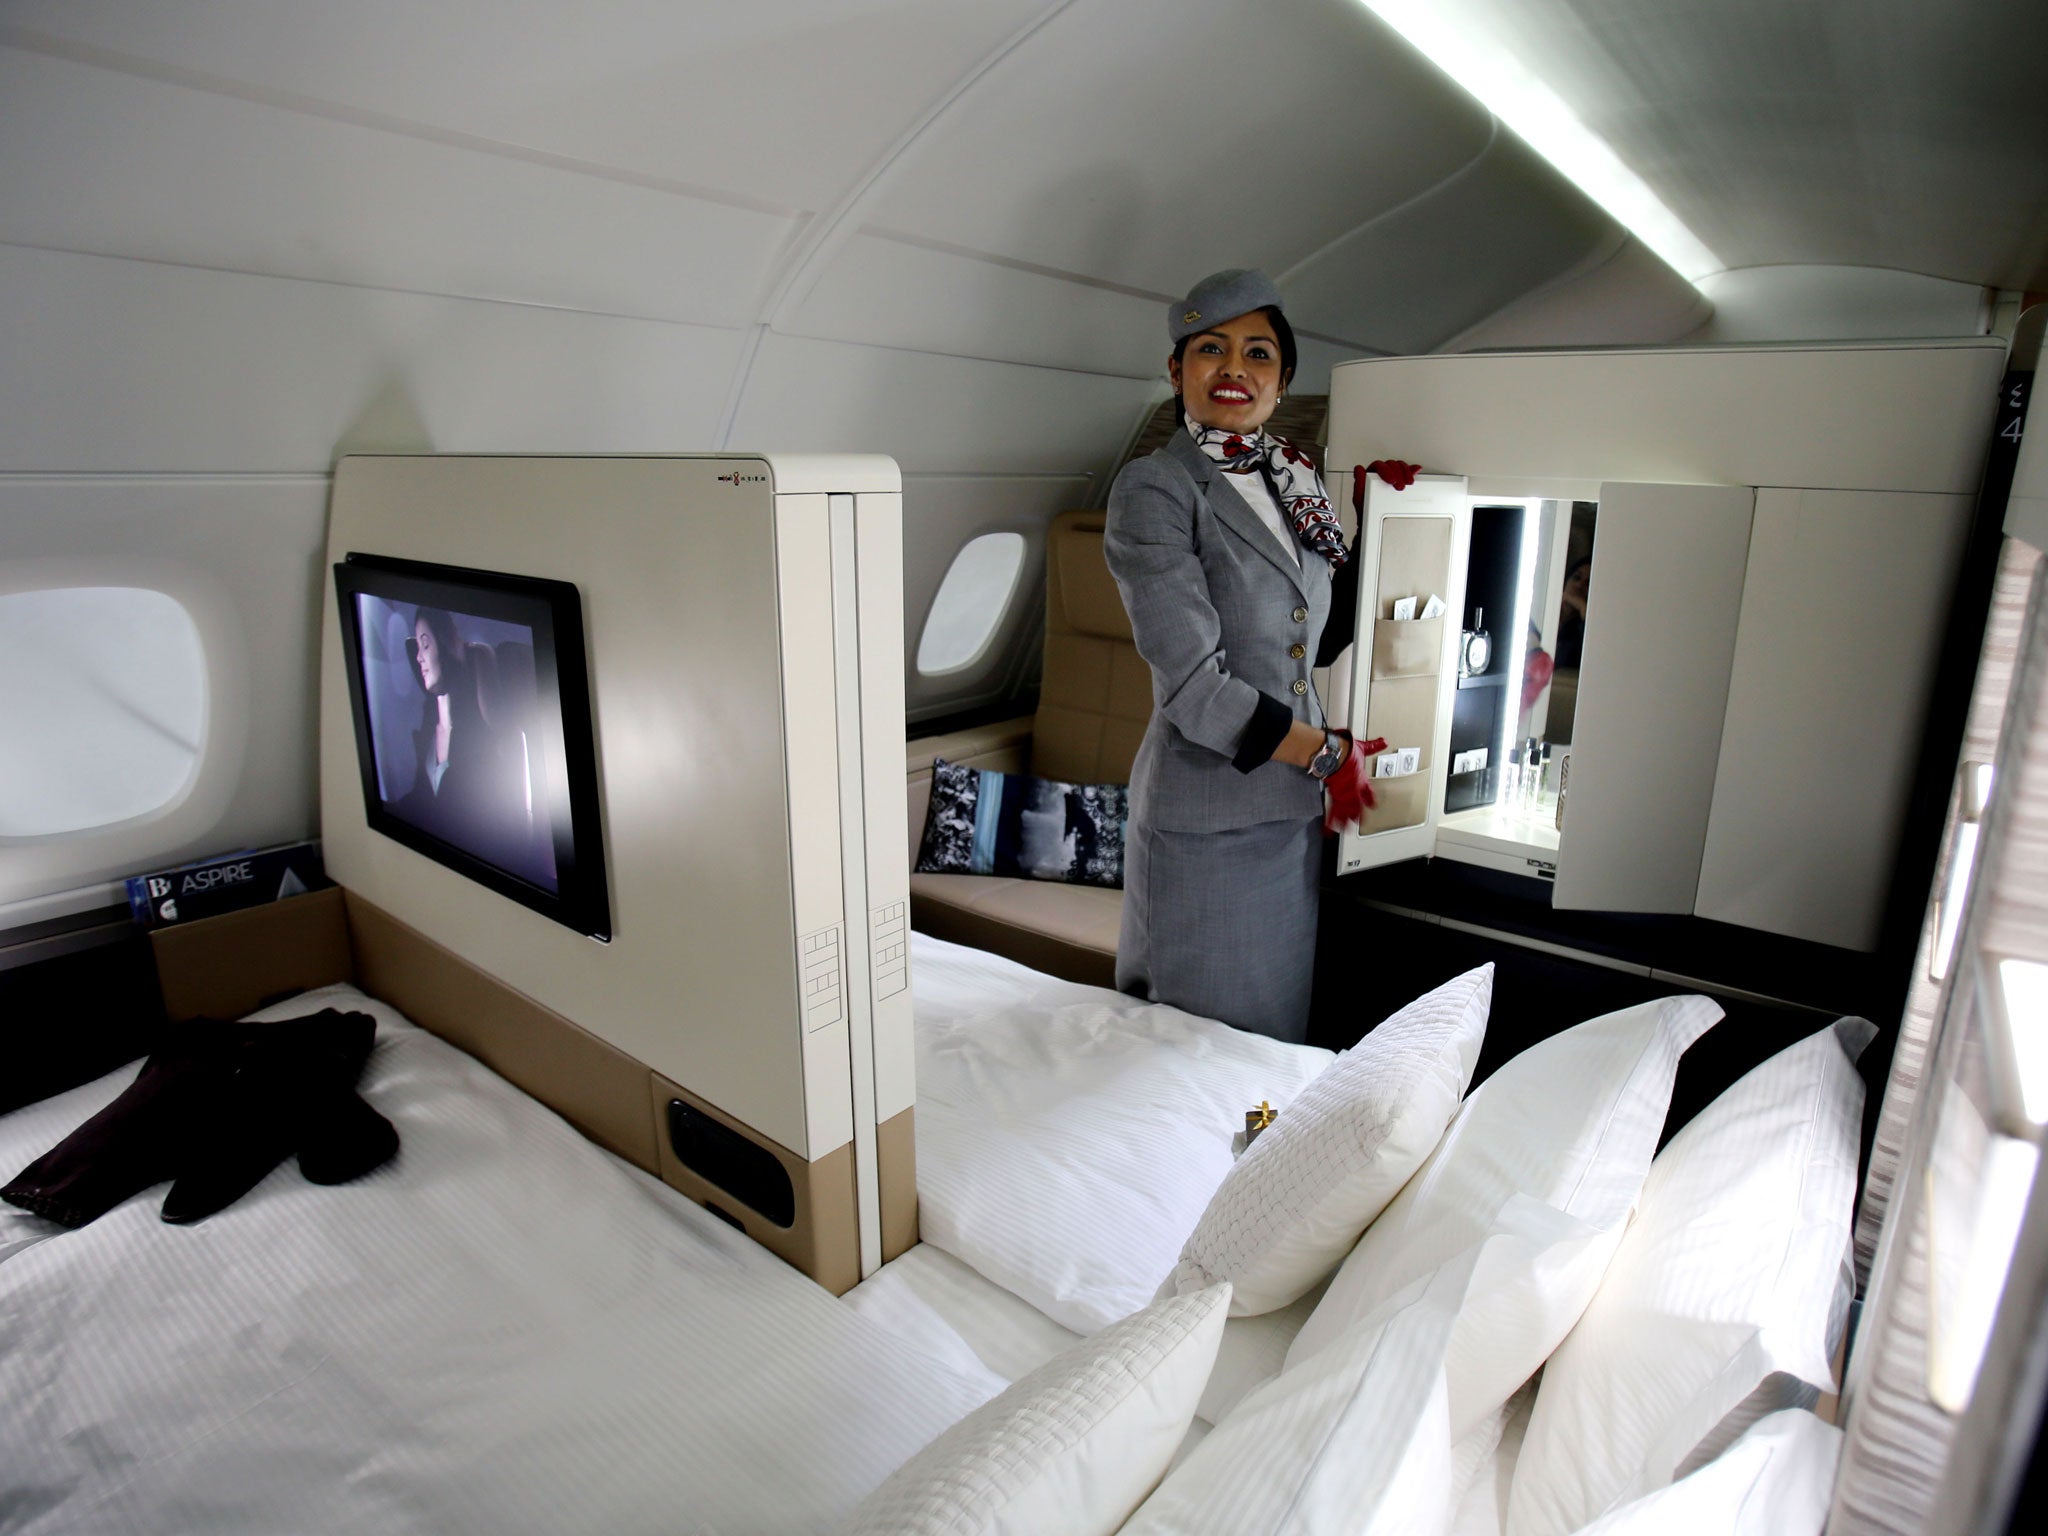 An Etihad Airways official stands inside a mock-up first class cabin,